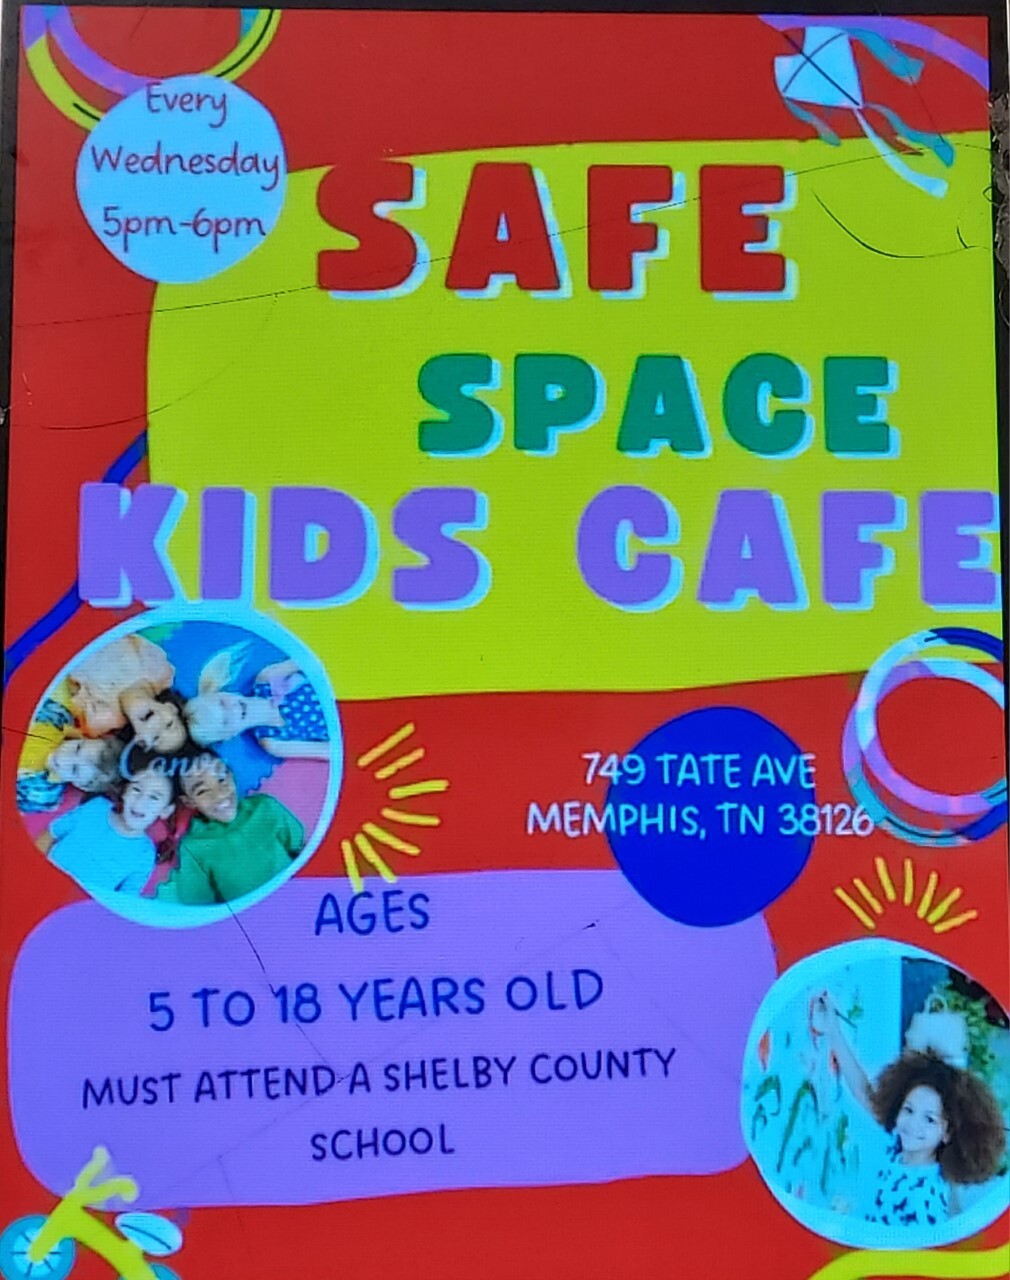 A SAFE SPACE KID'S CAFE